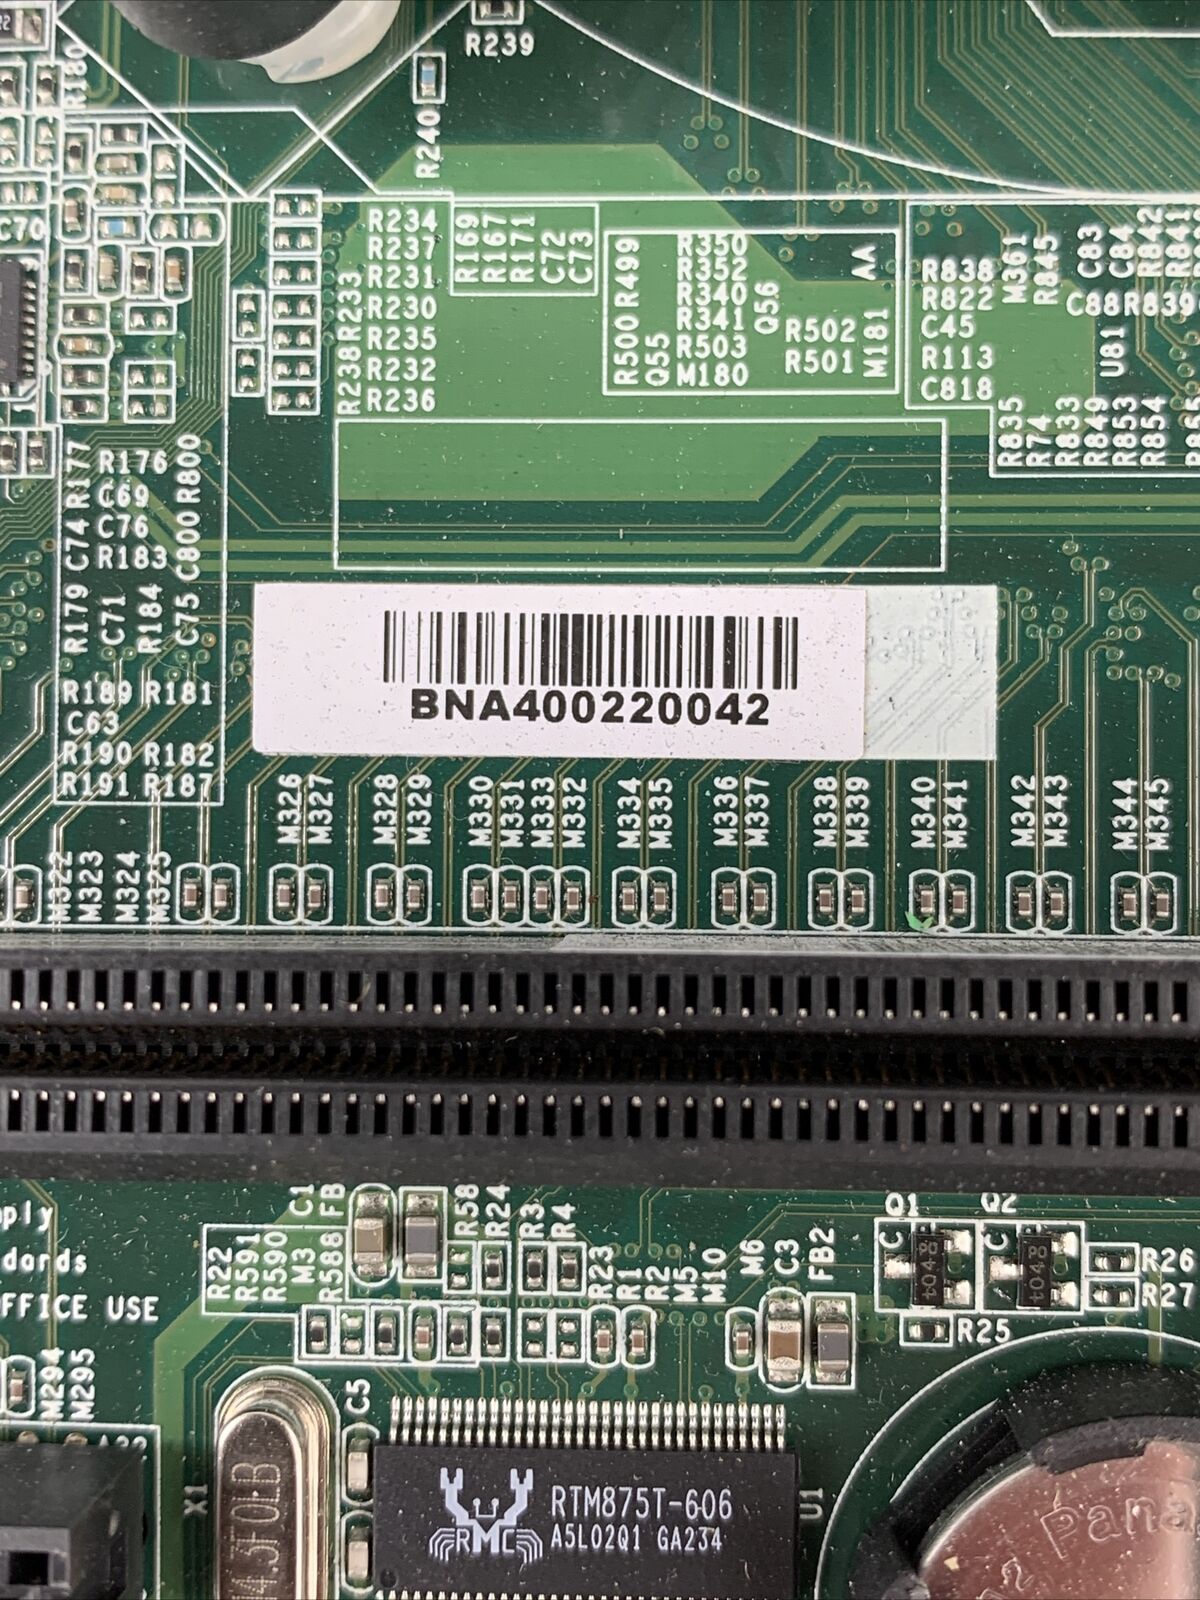 DFI PT330 Motherboard Intel Core i5-660 3.33GHz 4GB RAM w/ I/O Shield